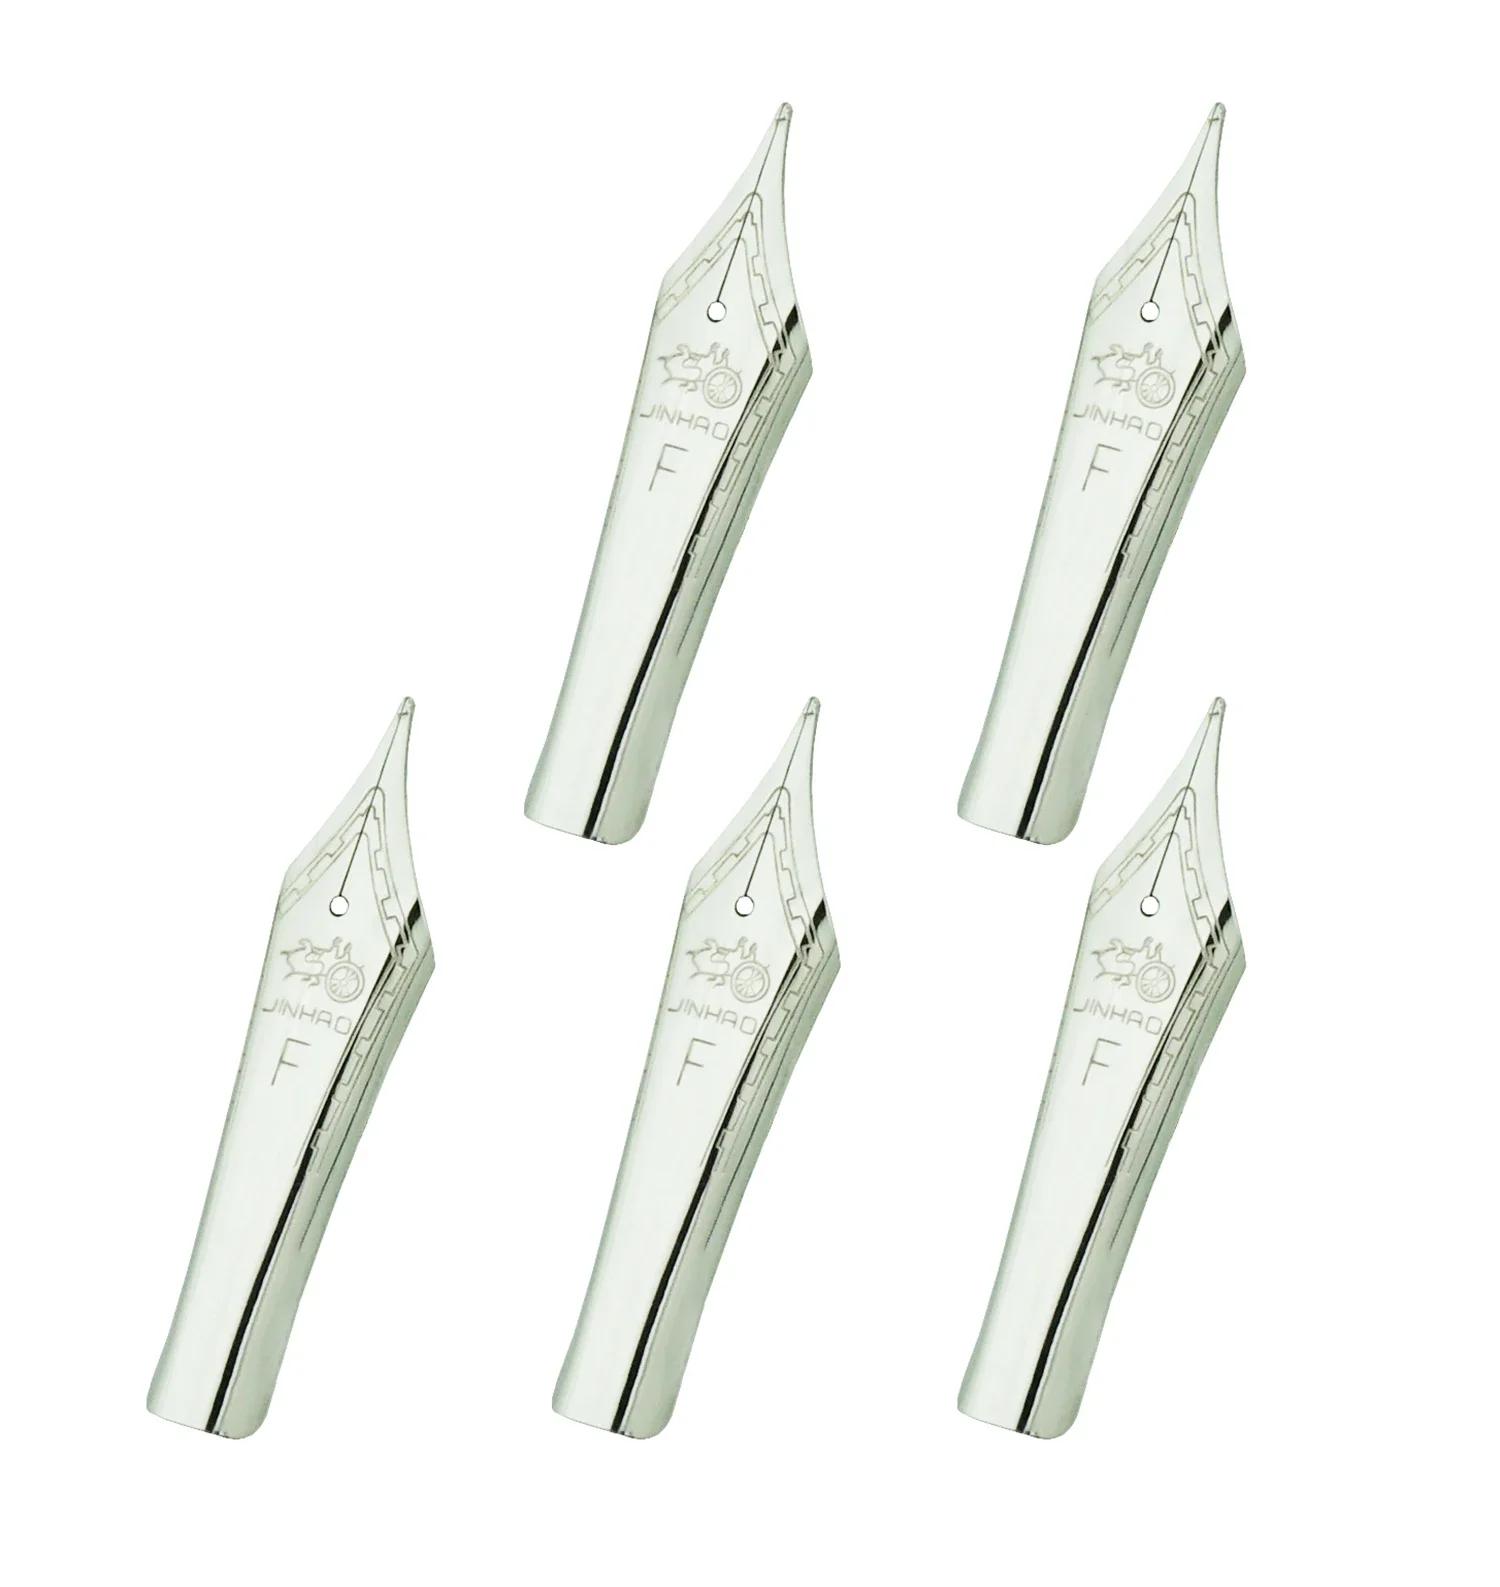 3PCS/ 5PCS Original Jinhao Fountain Pen Nibs #6 Nib Golden/Silver EF F M Size for Jinhao 100, 450, 159, 750, Double Dragon Pens